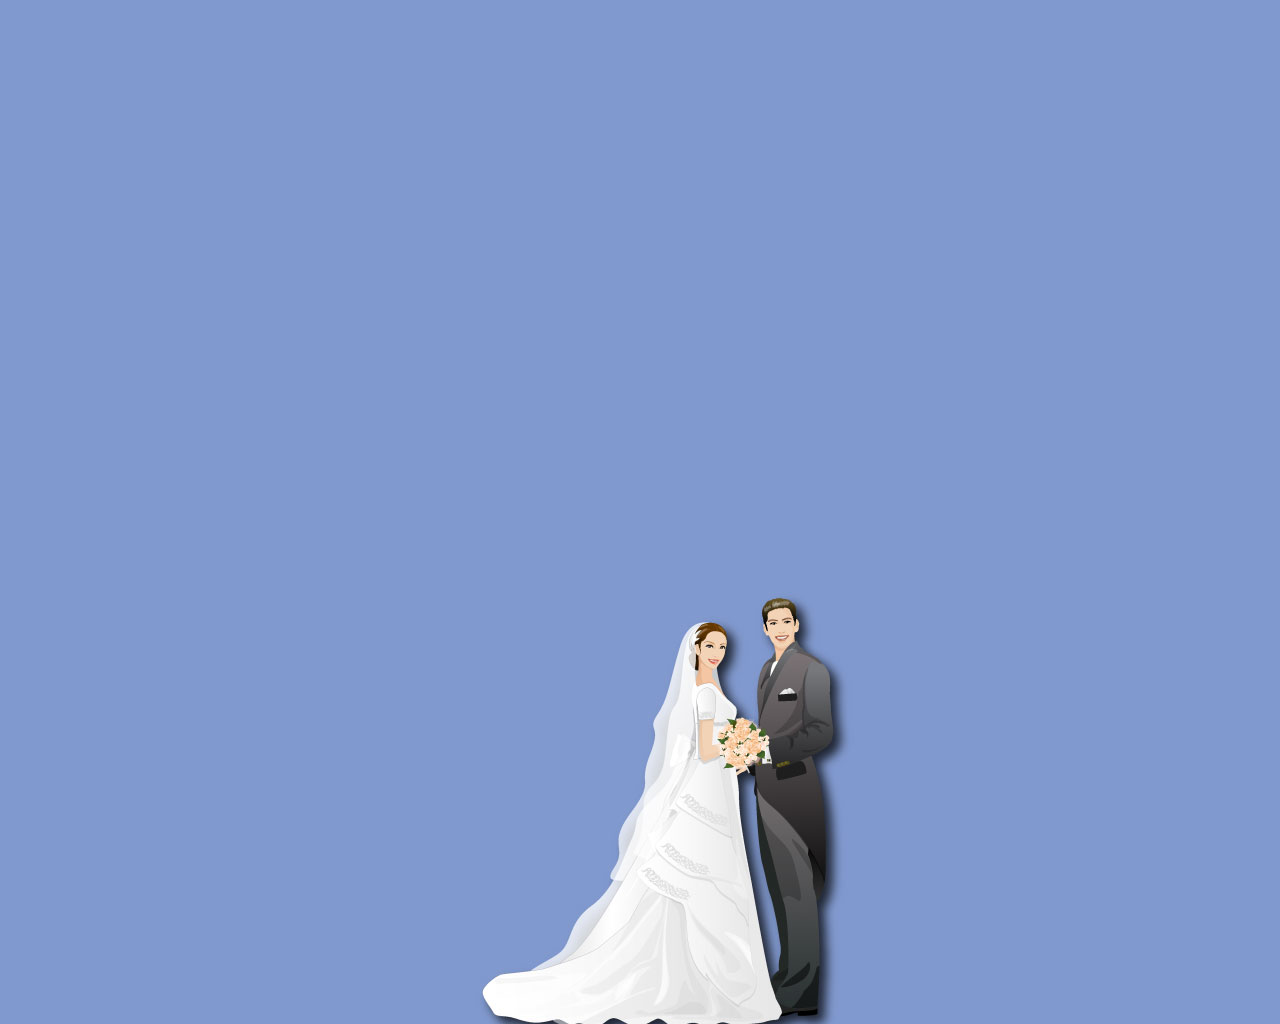 Clip Art Wedding Backgrounds powerpoint backgrounds